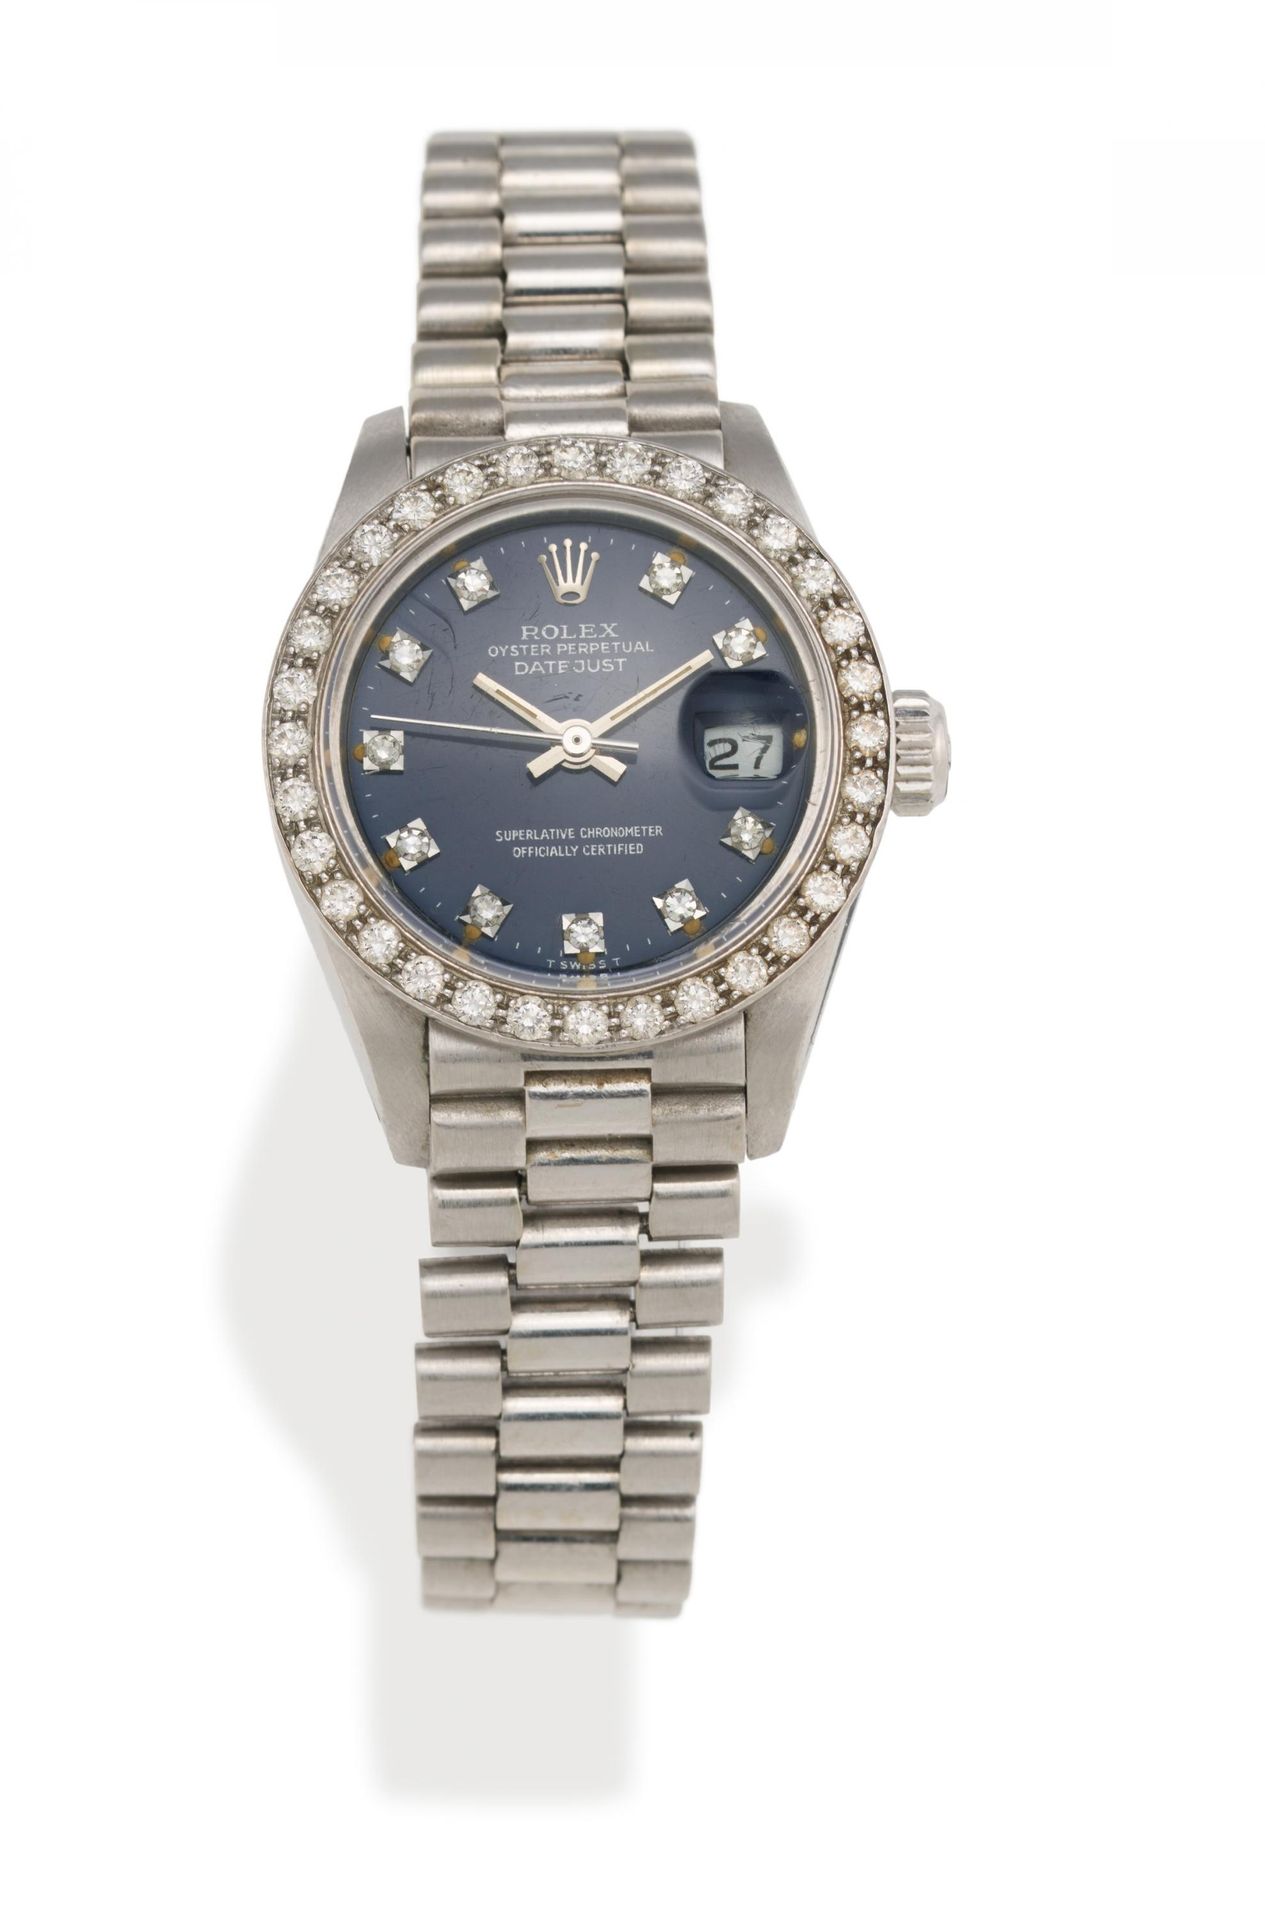 ROLEX ROLEX
Lady Datejust. Wristwatch. 

Origin: Switzerland, Geneve. 
Date: Ca.&hellip;